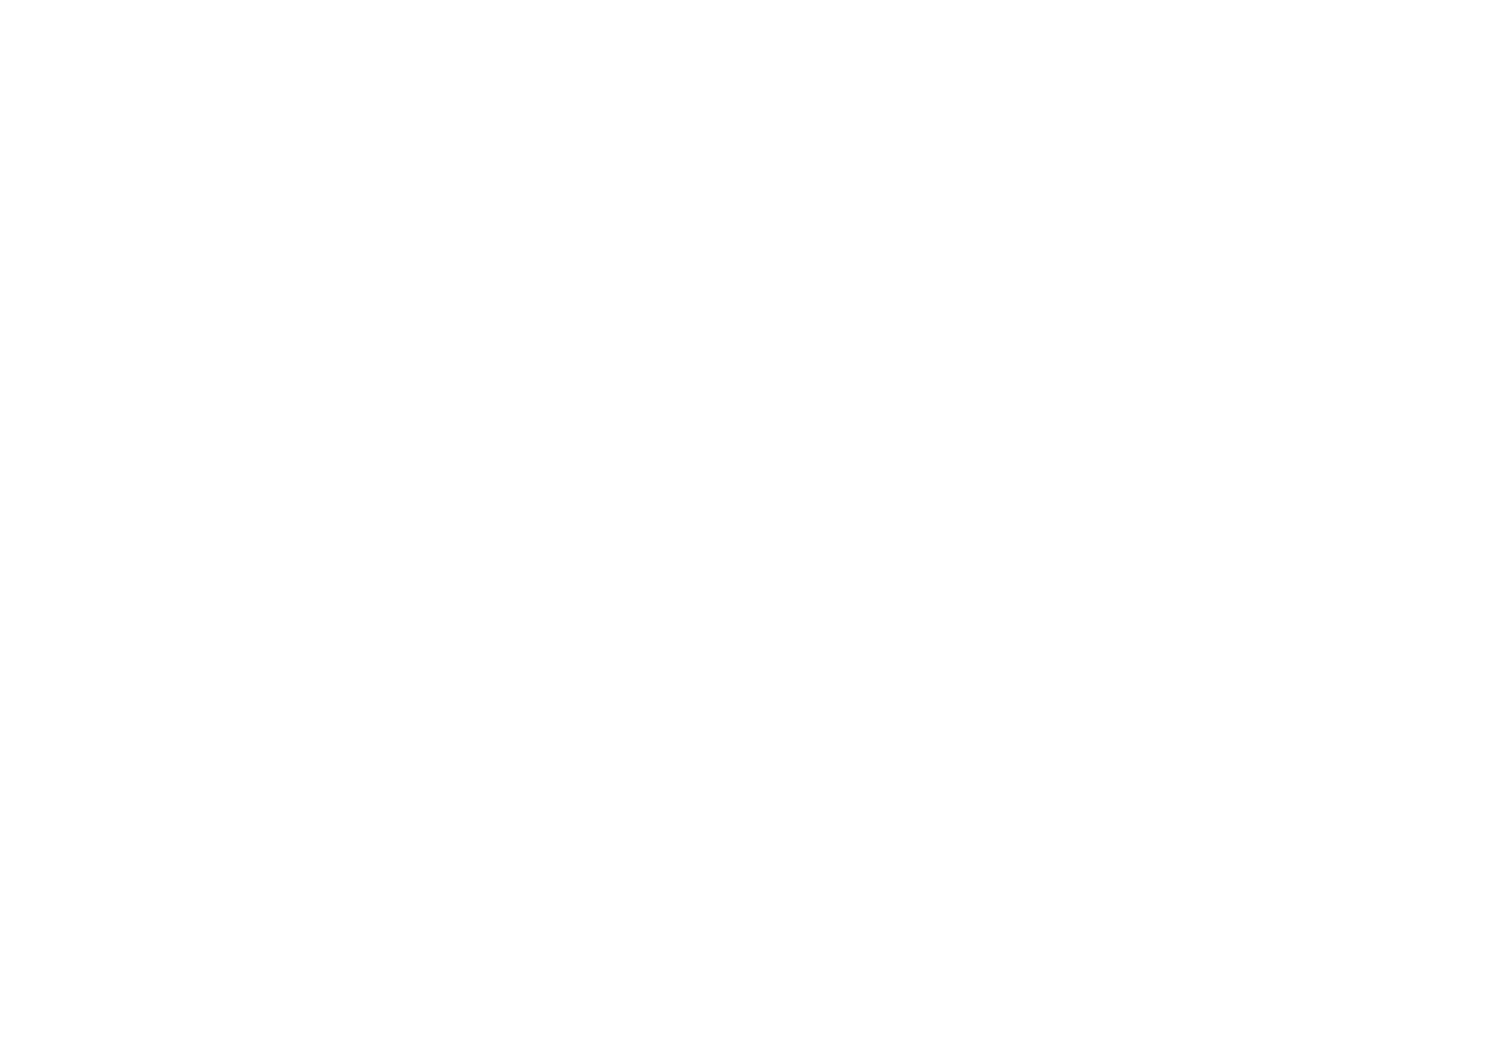 DUKE AVIATION